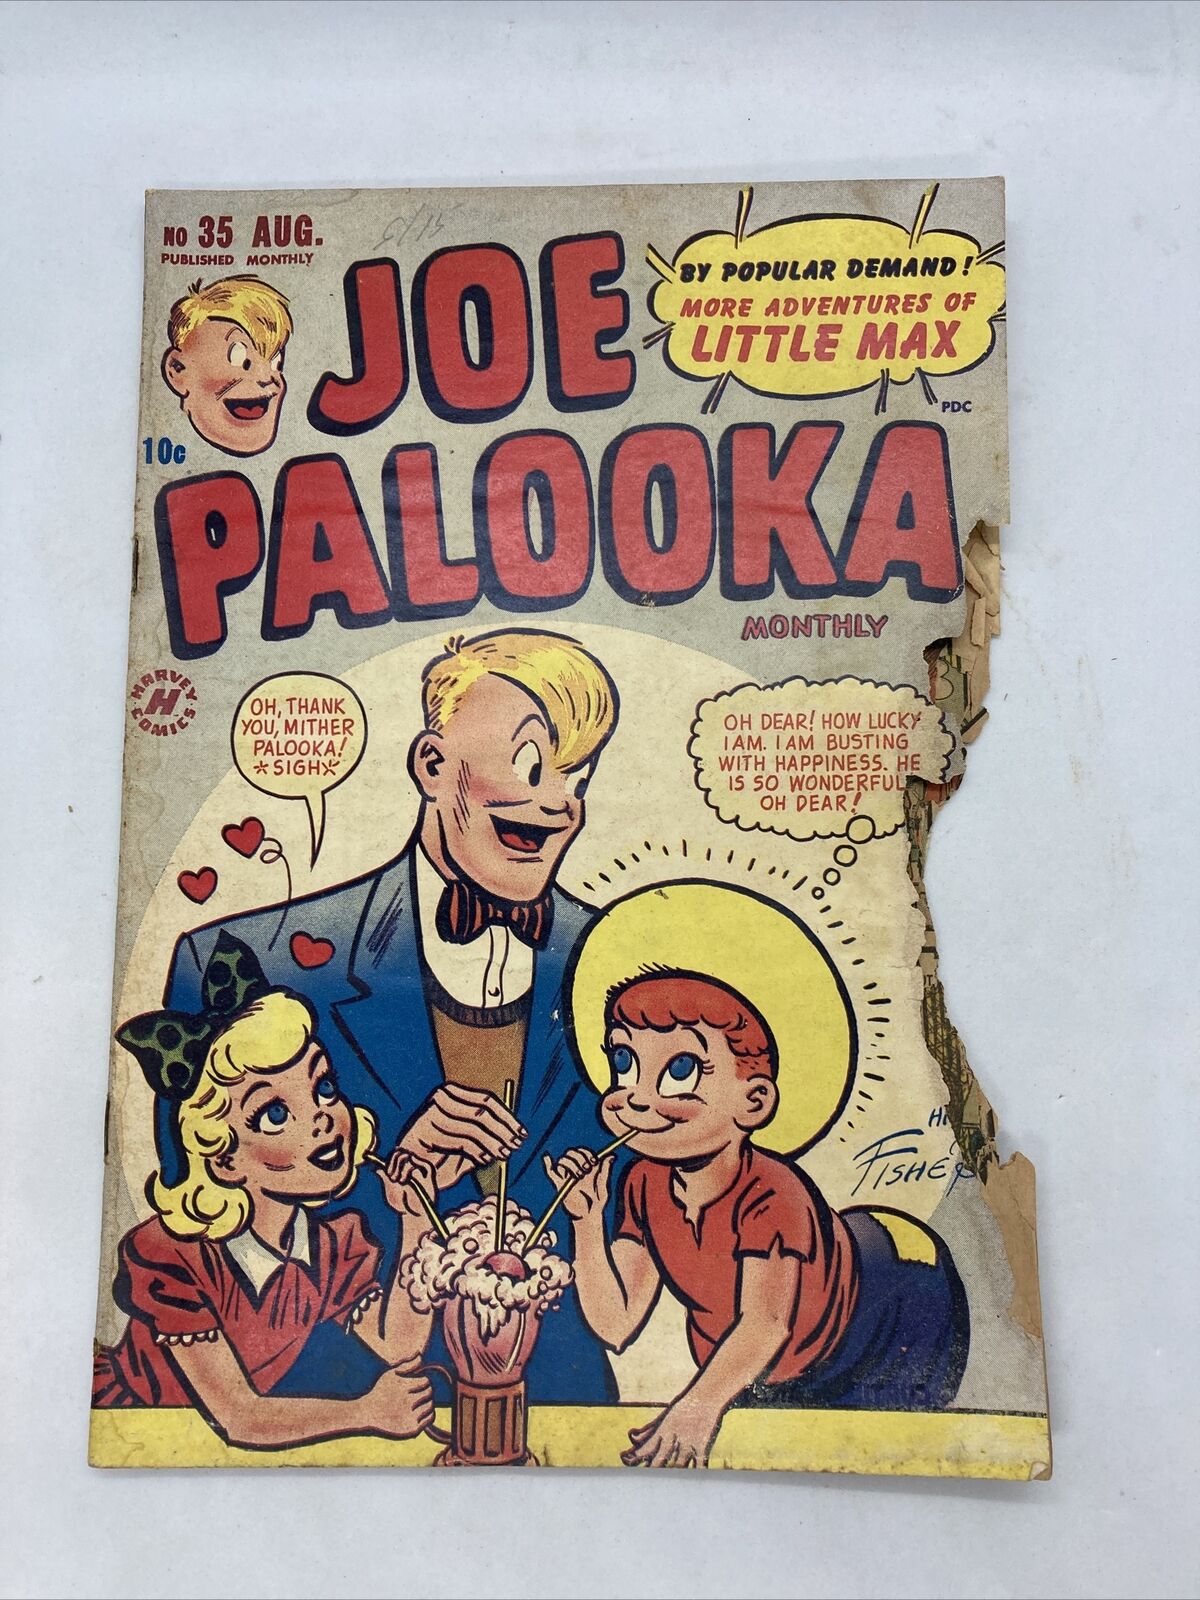 Joe Palooka #35 1949 Damage To The Side Very Rough AS IS